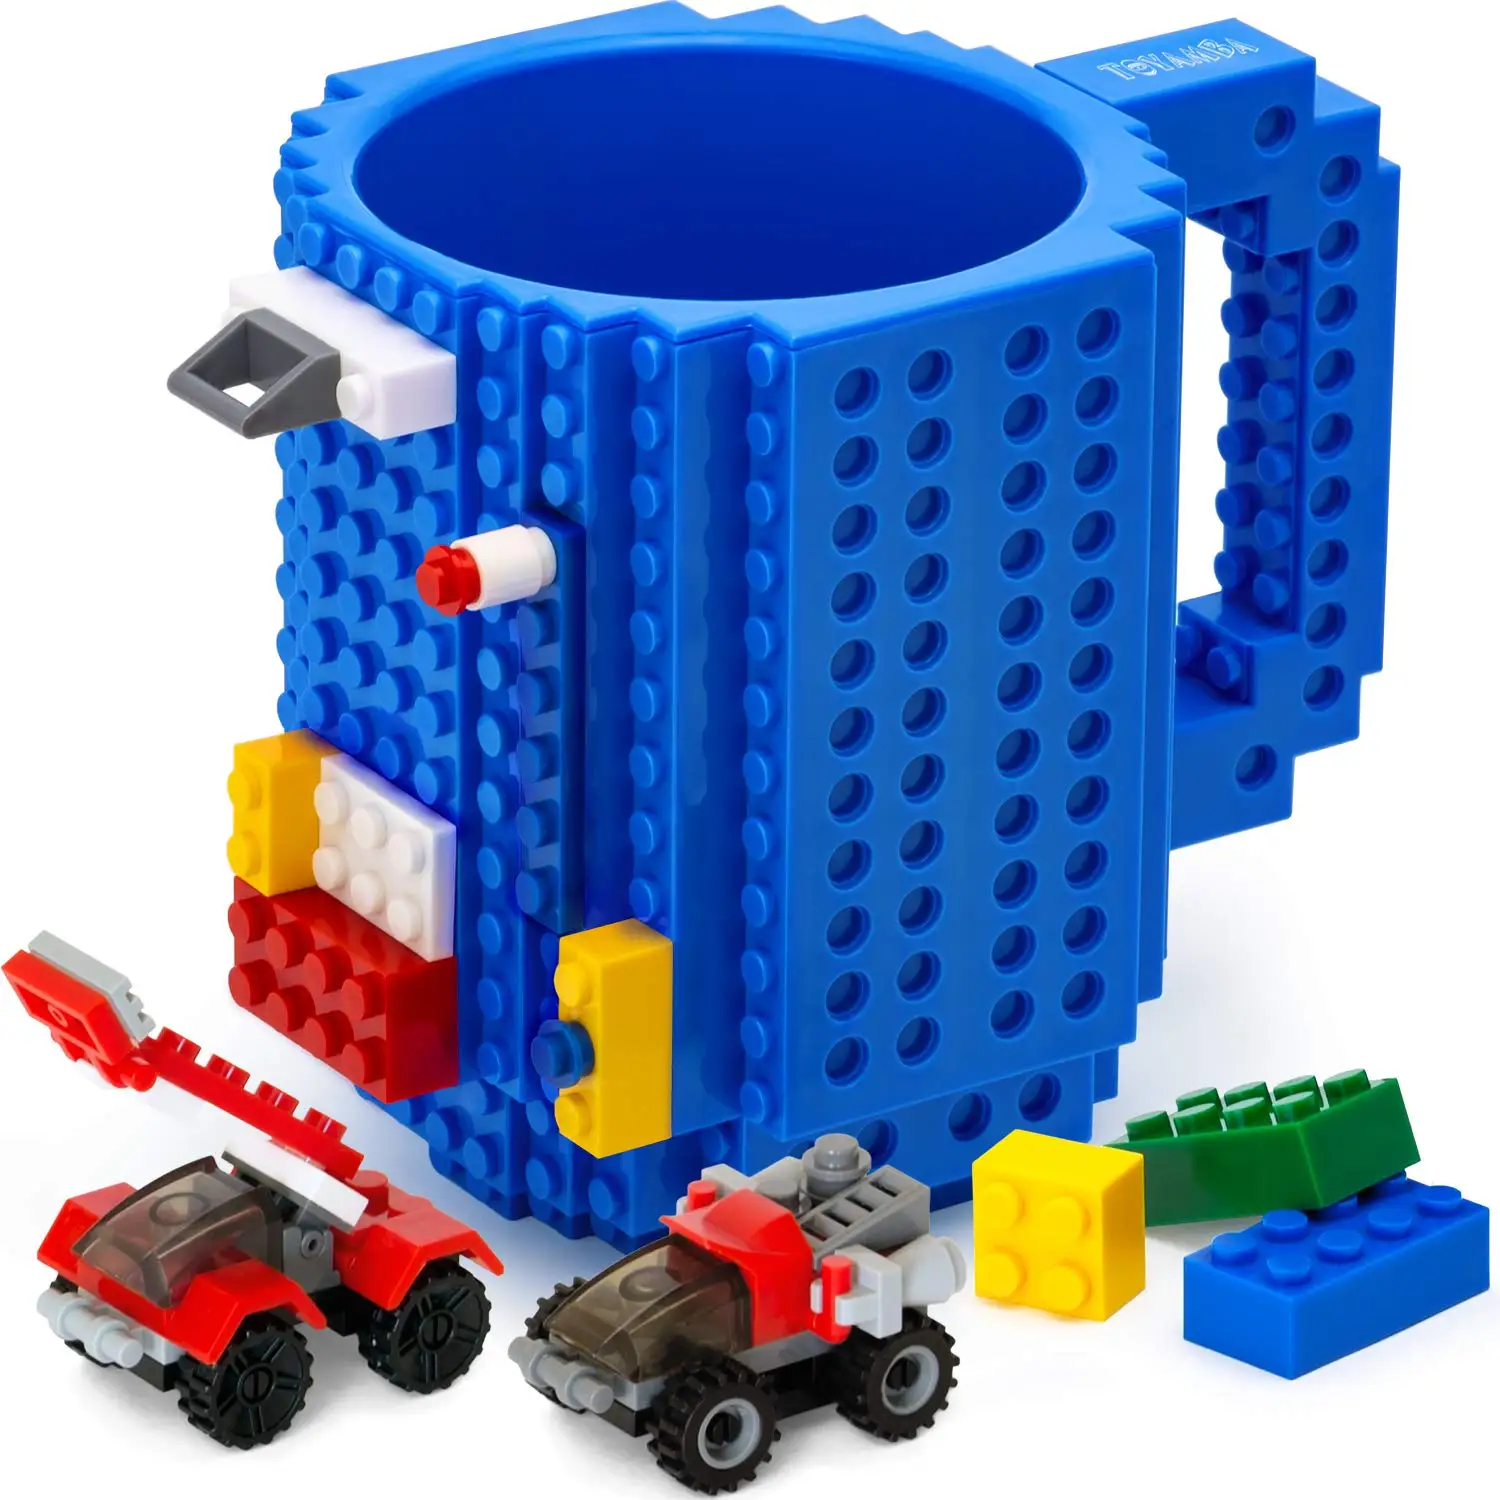 Build-on Brick Coffee Mug Funny DIY Novelty Cup with Building Blocks Creative for Kids Men Women Xmas Birthday